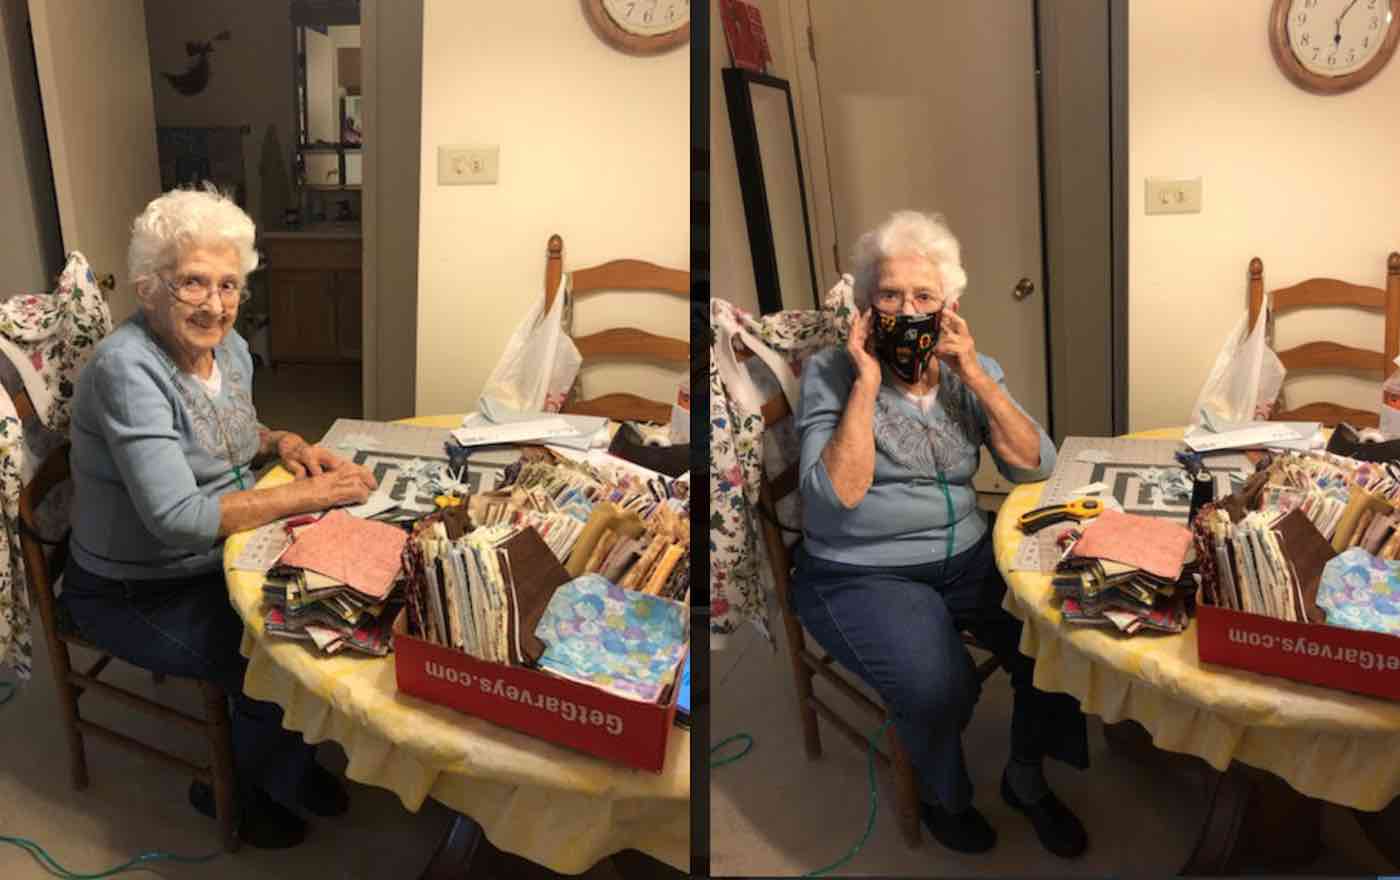 89-year-old grandma